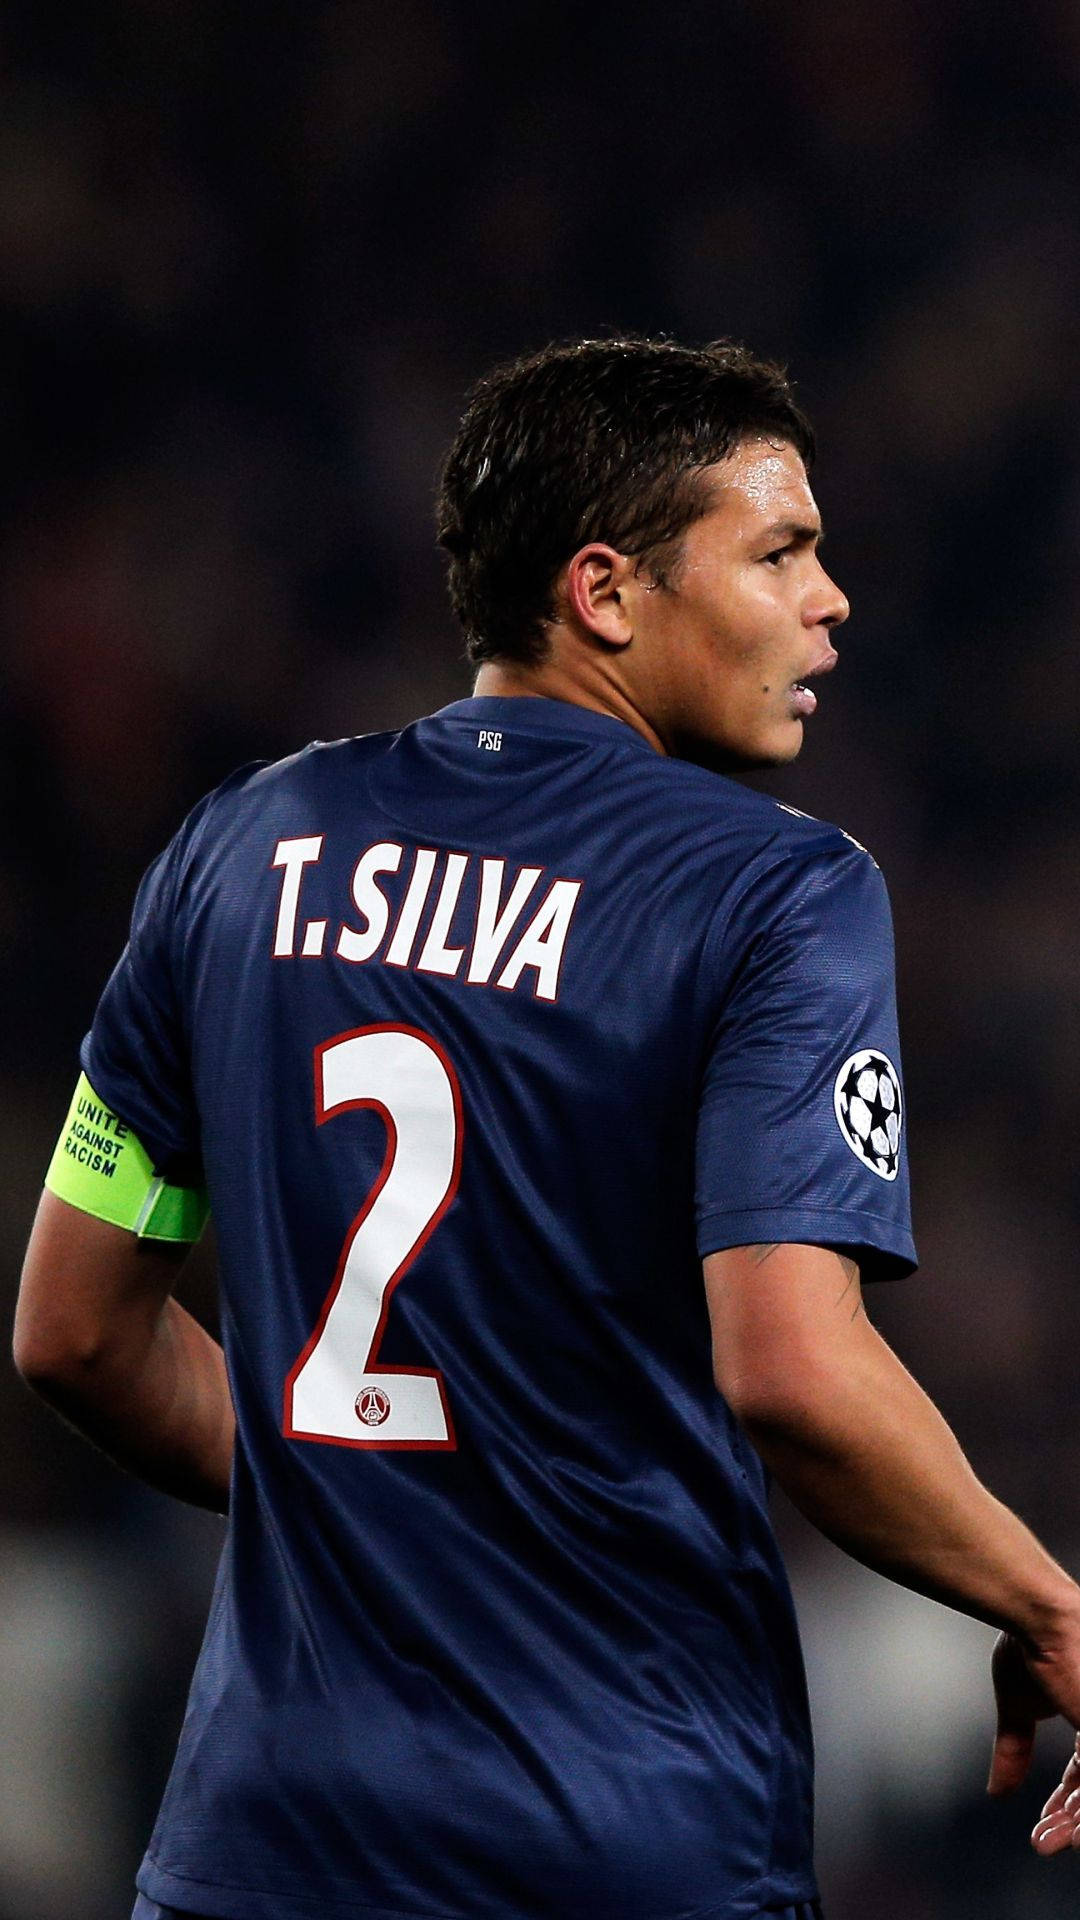 Número2 De La Camiseta De Thiago Silva. Fondo de pantalla